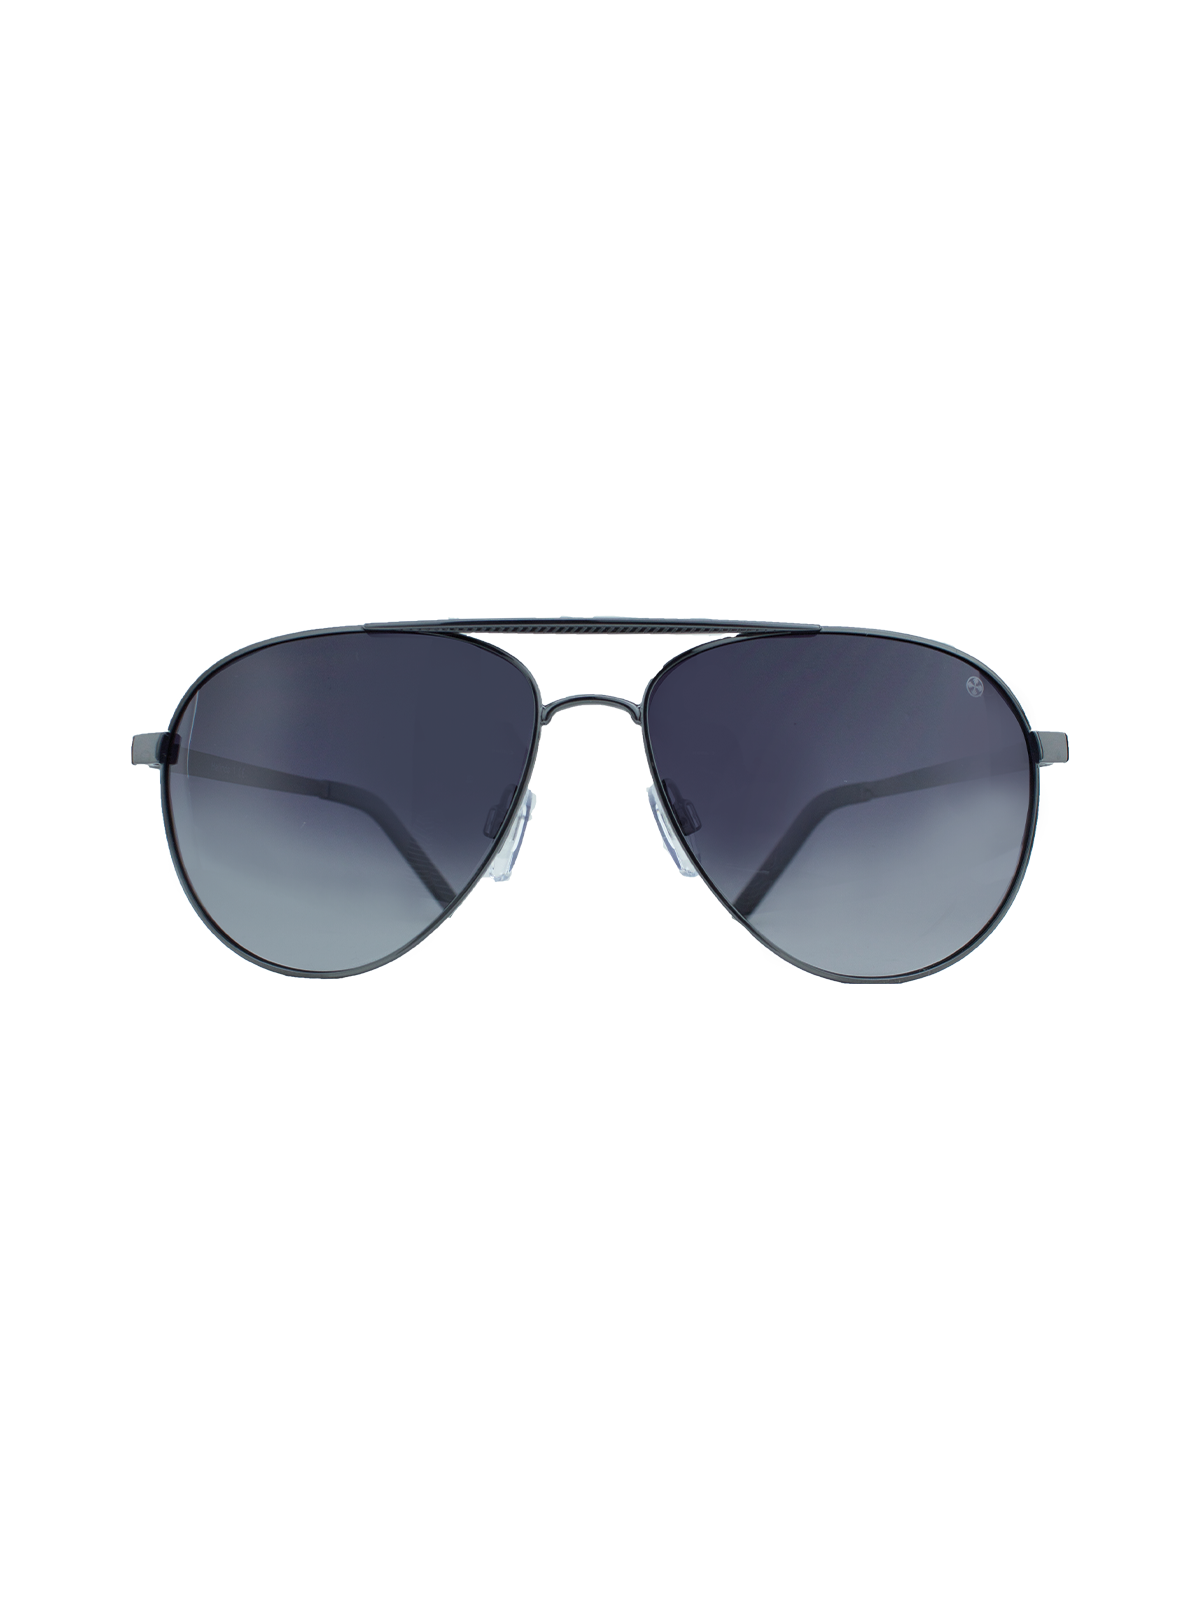 Helindo 1 Sunglasses | Grey